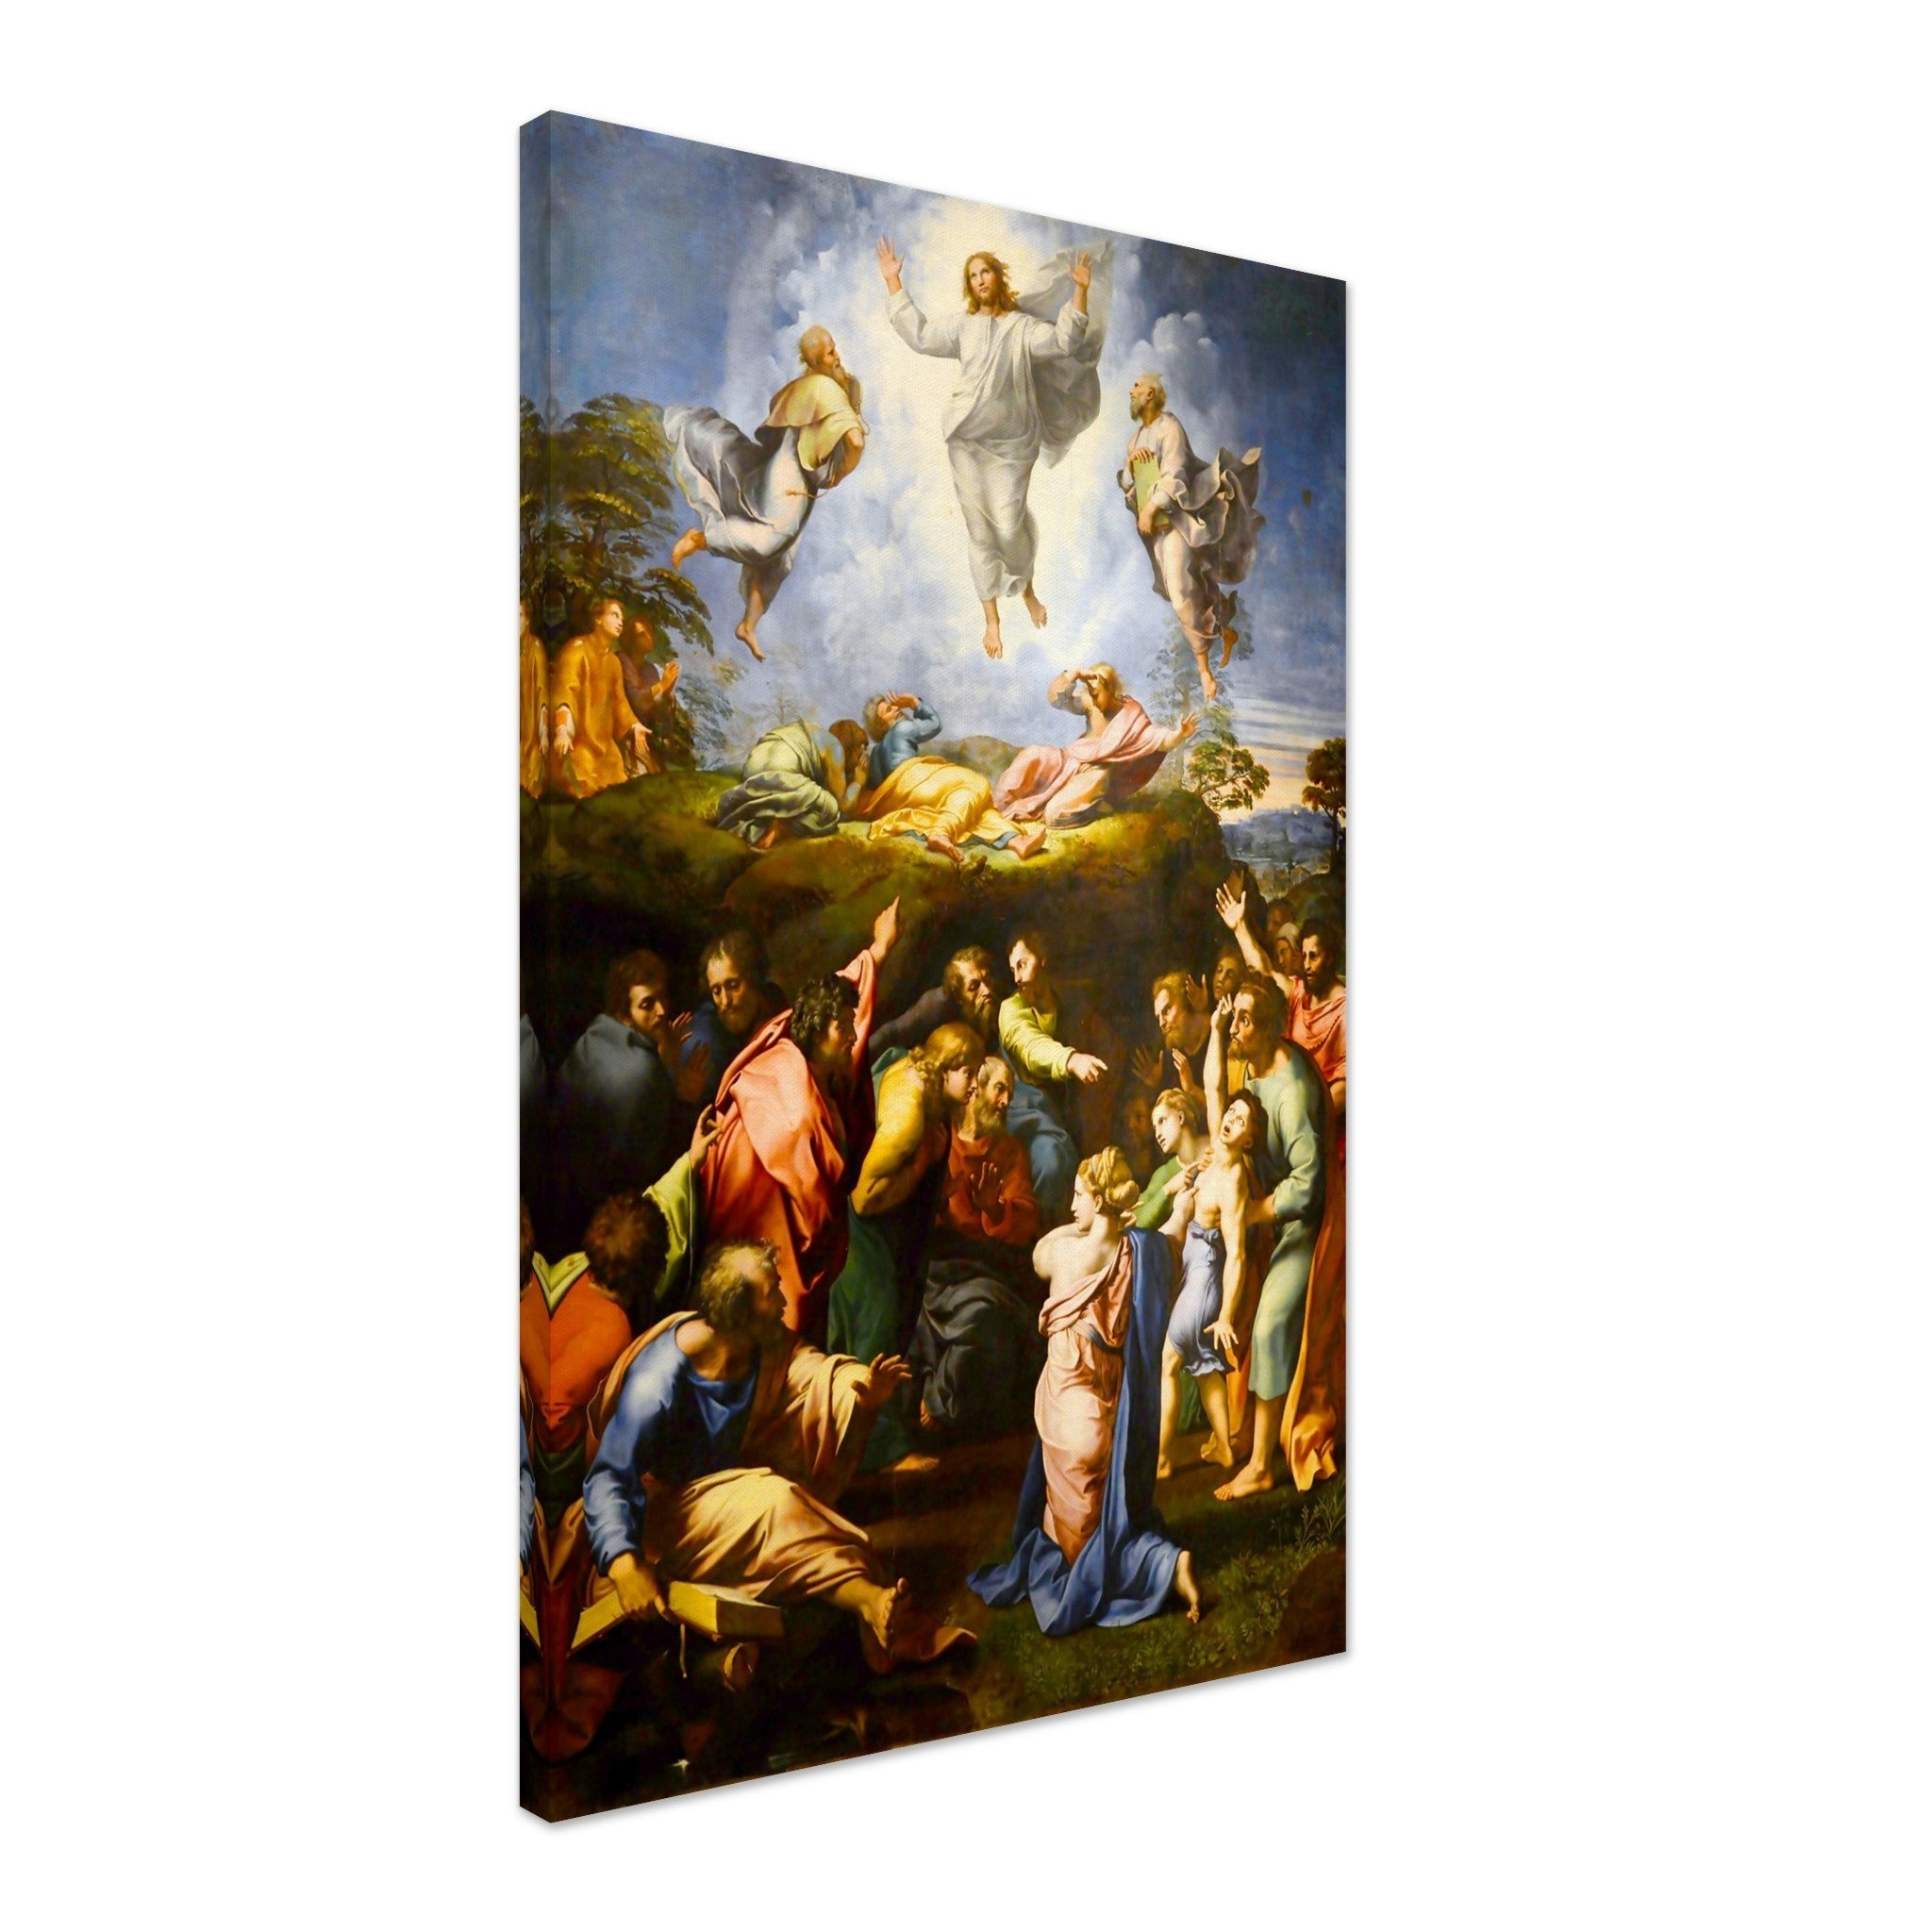 Transfiguration Canvas, By Raphael Around 1520 - Transfiguration Canvas Print Renaissance Raphael - WallArtPrints4U